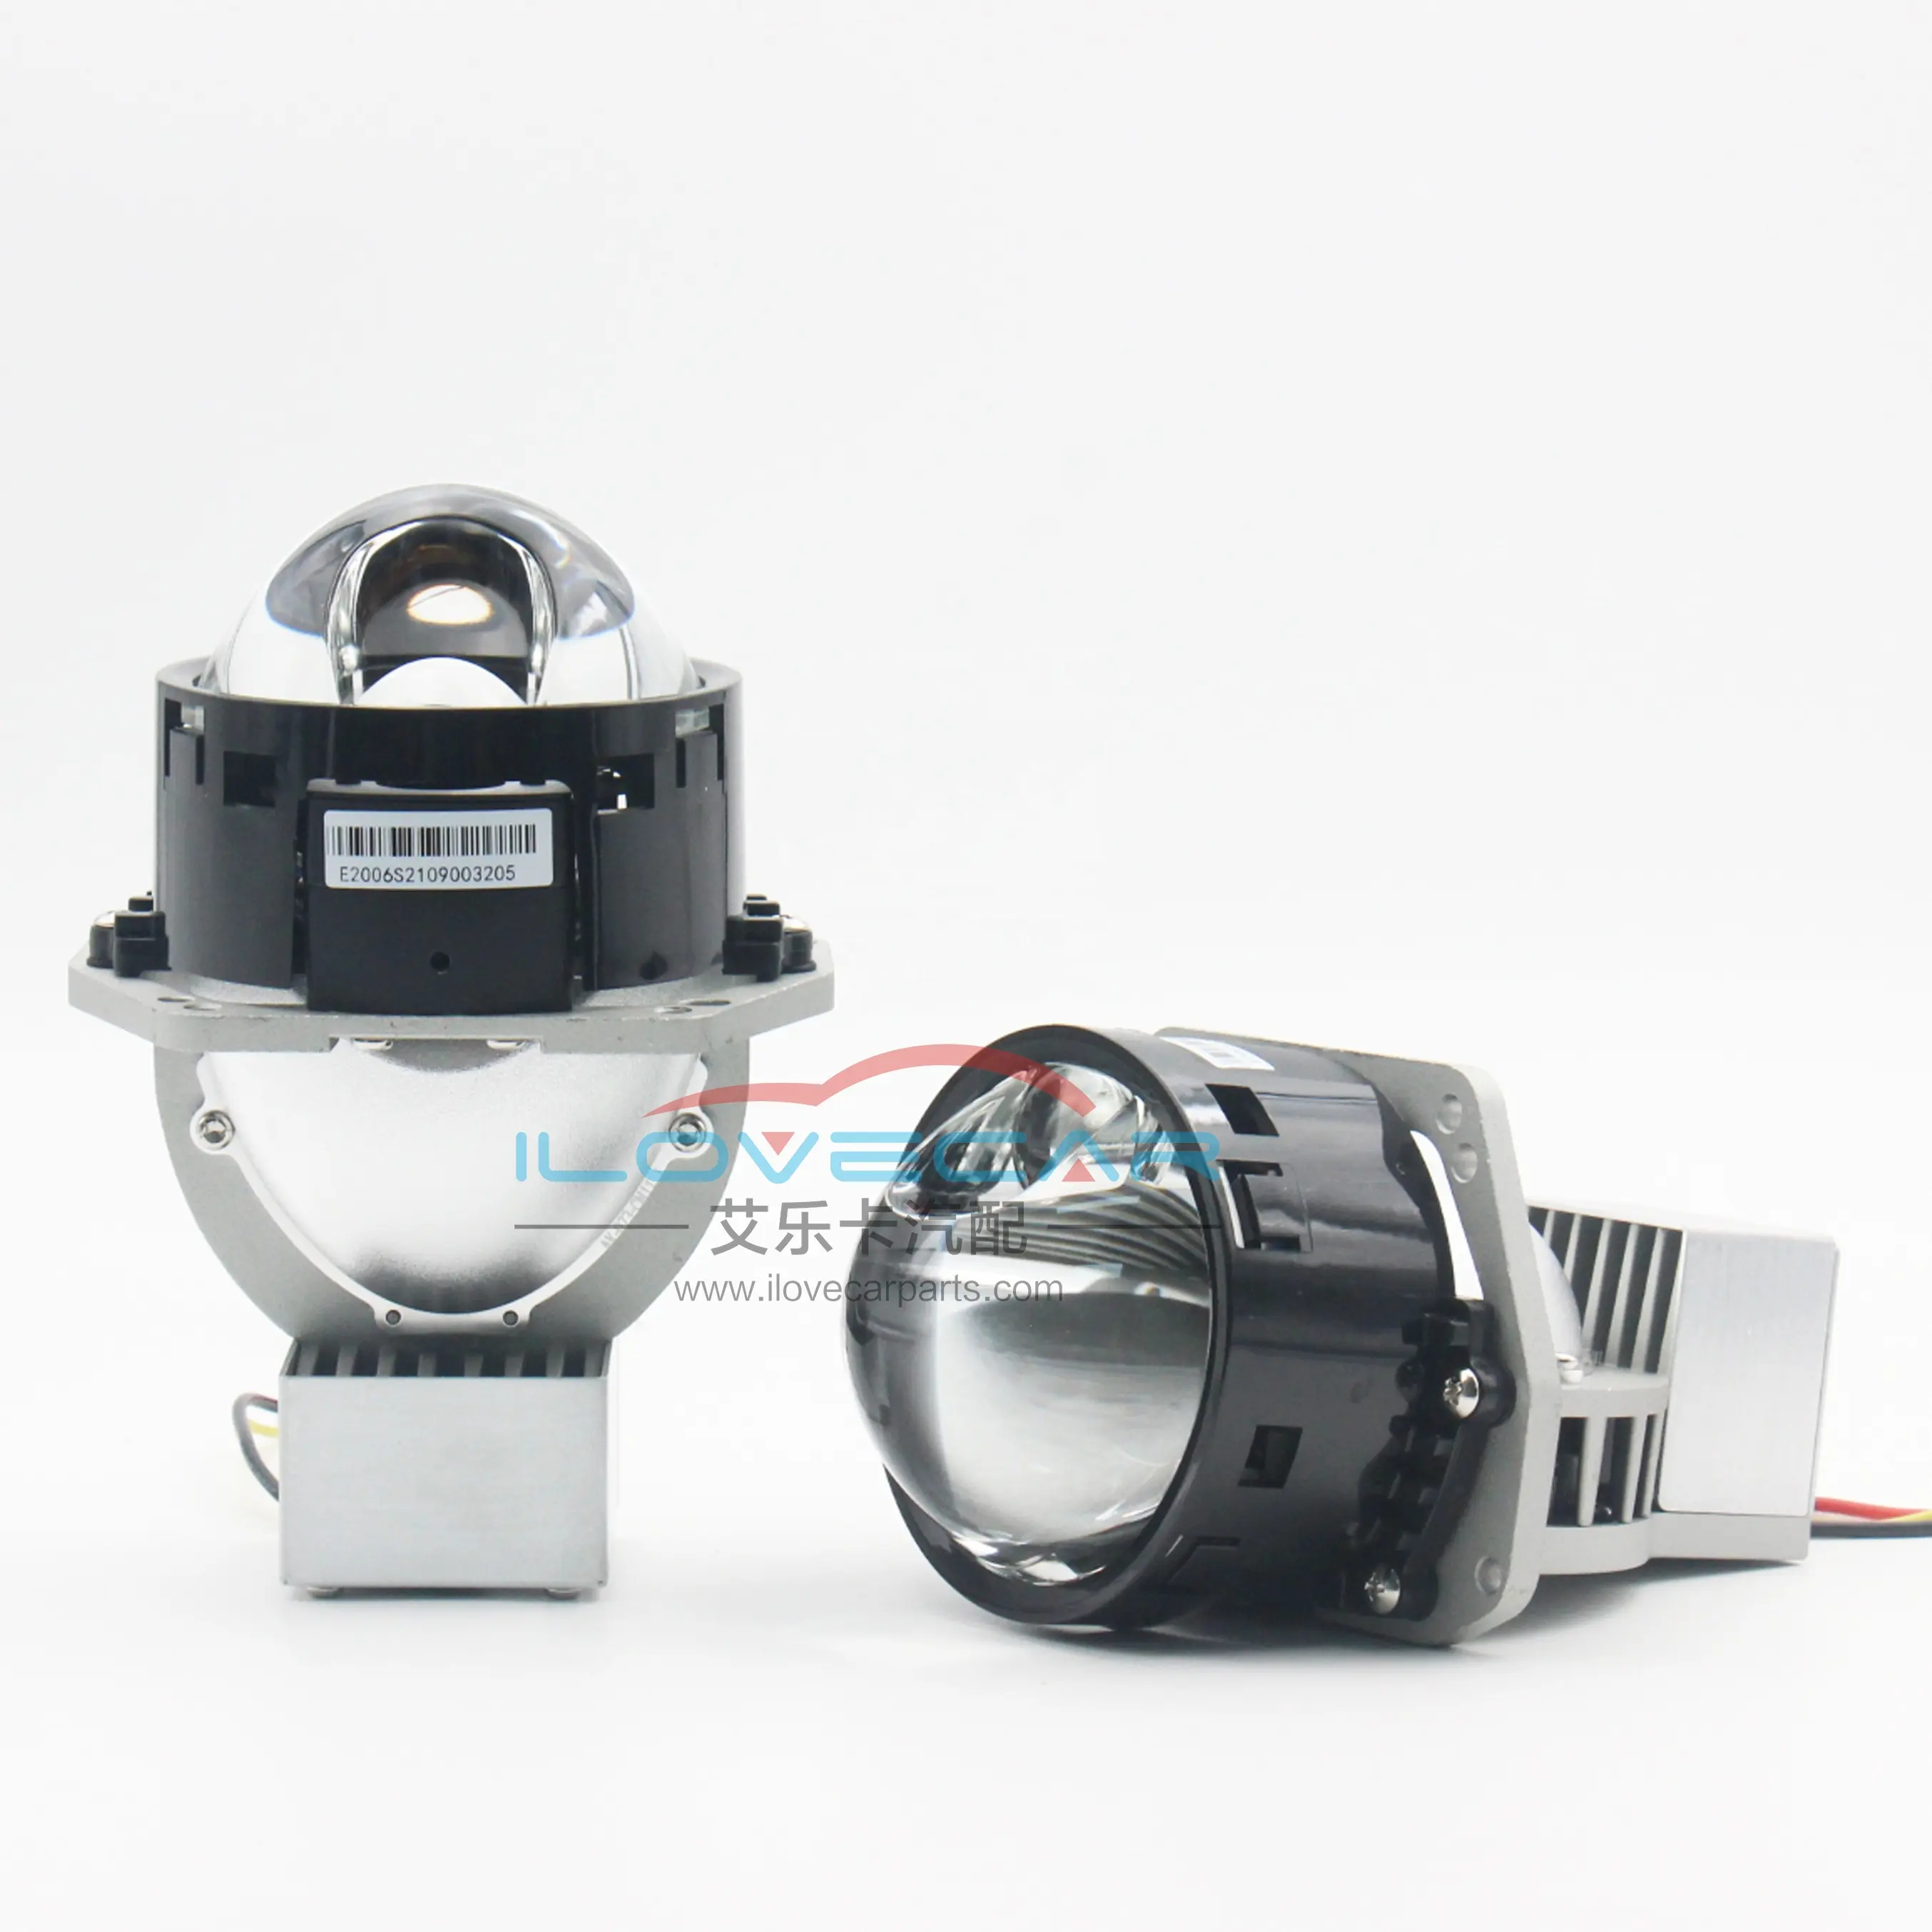 3 года гарантии 65 Вт 3,0 дюйма Bi-LED проекционный объектив RHD LHD для модернизации автомобильных фар Bi LED прожектор